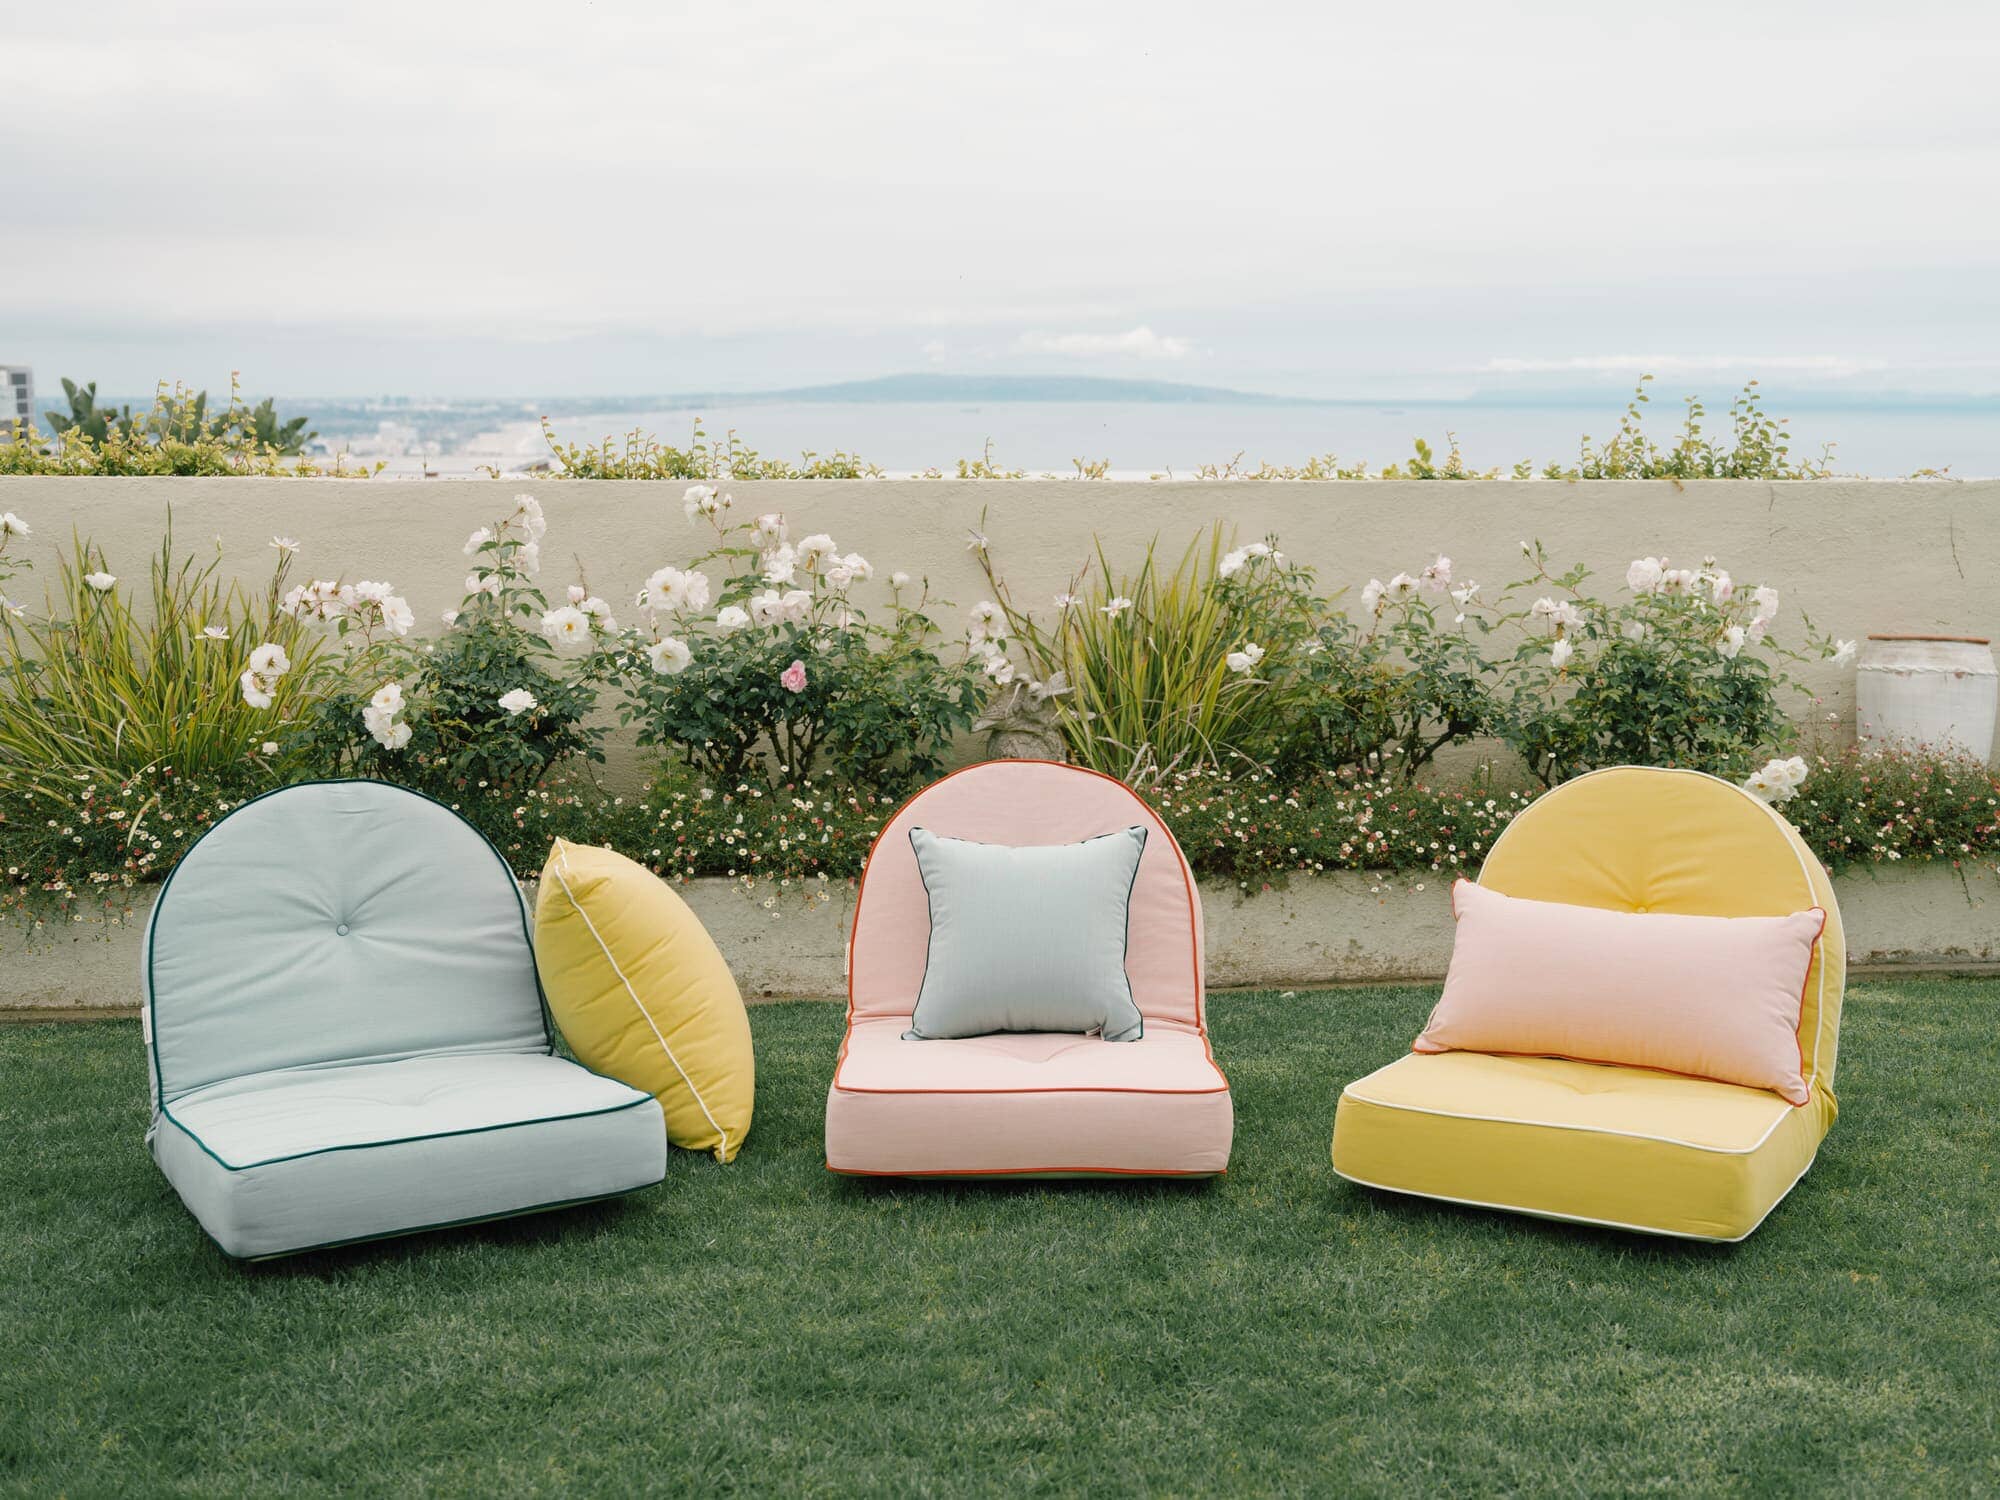 Riviera reclining loungers in a garden setting